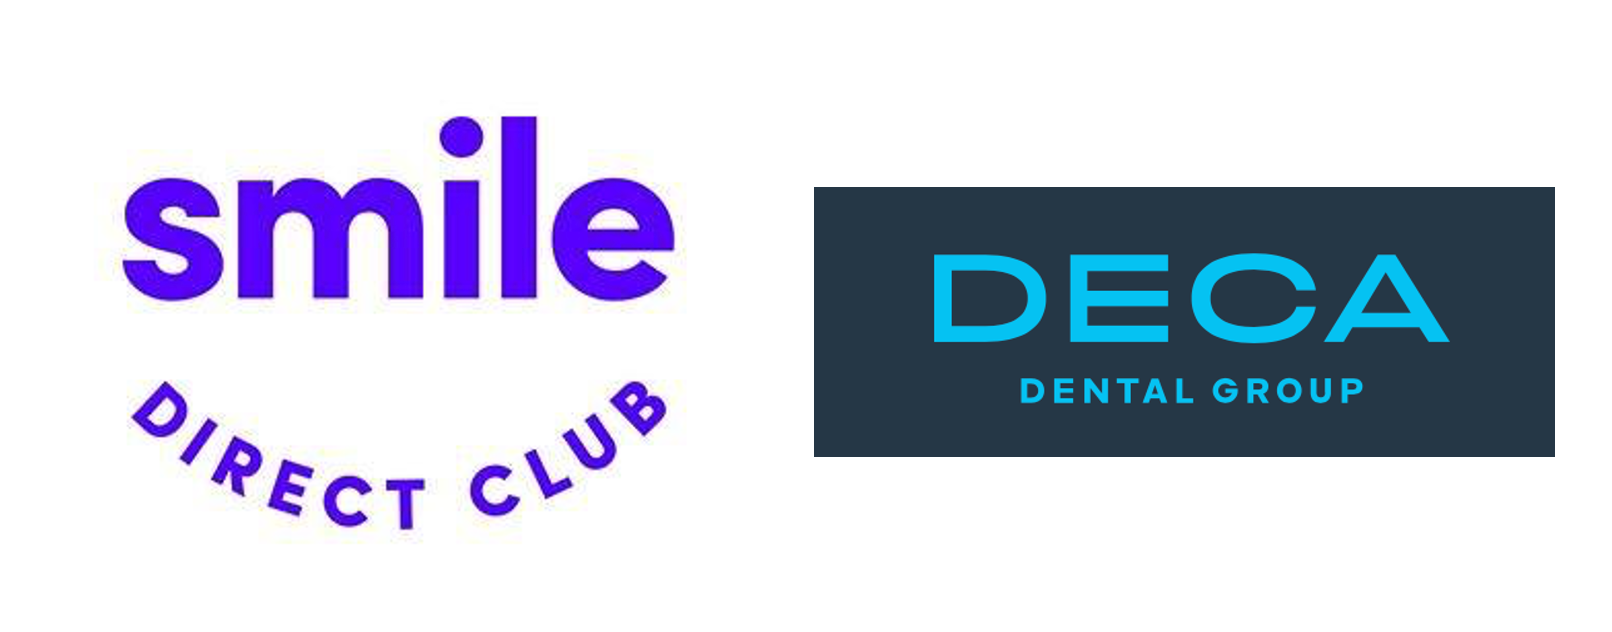 SmileDirect Club partners with DECA Dental 